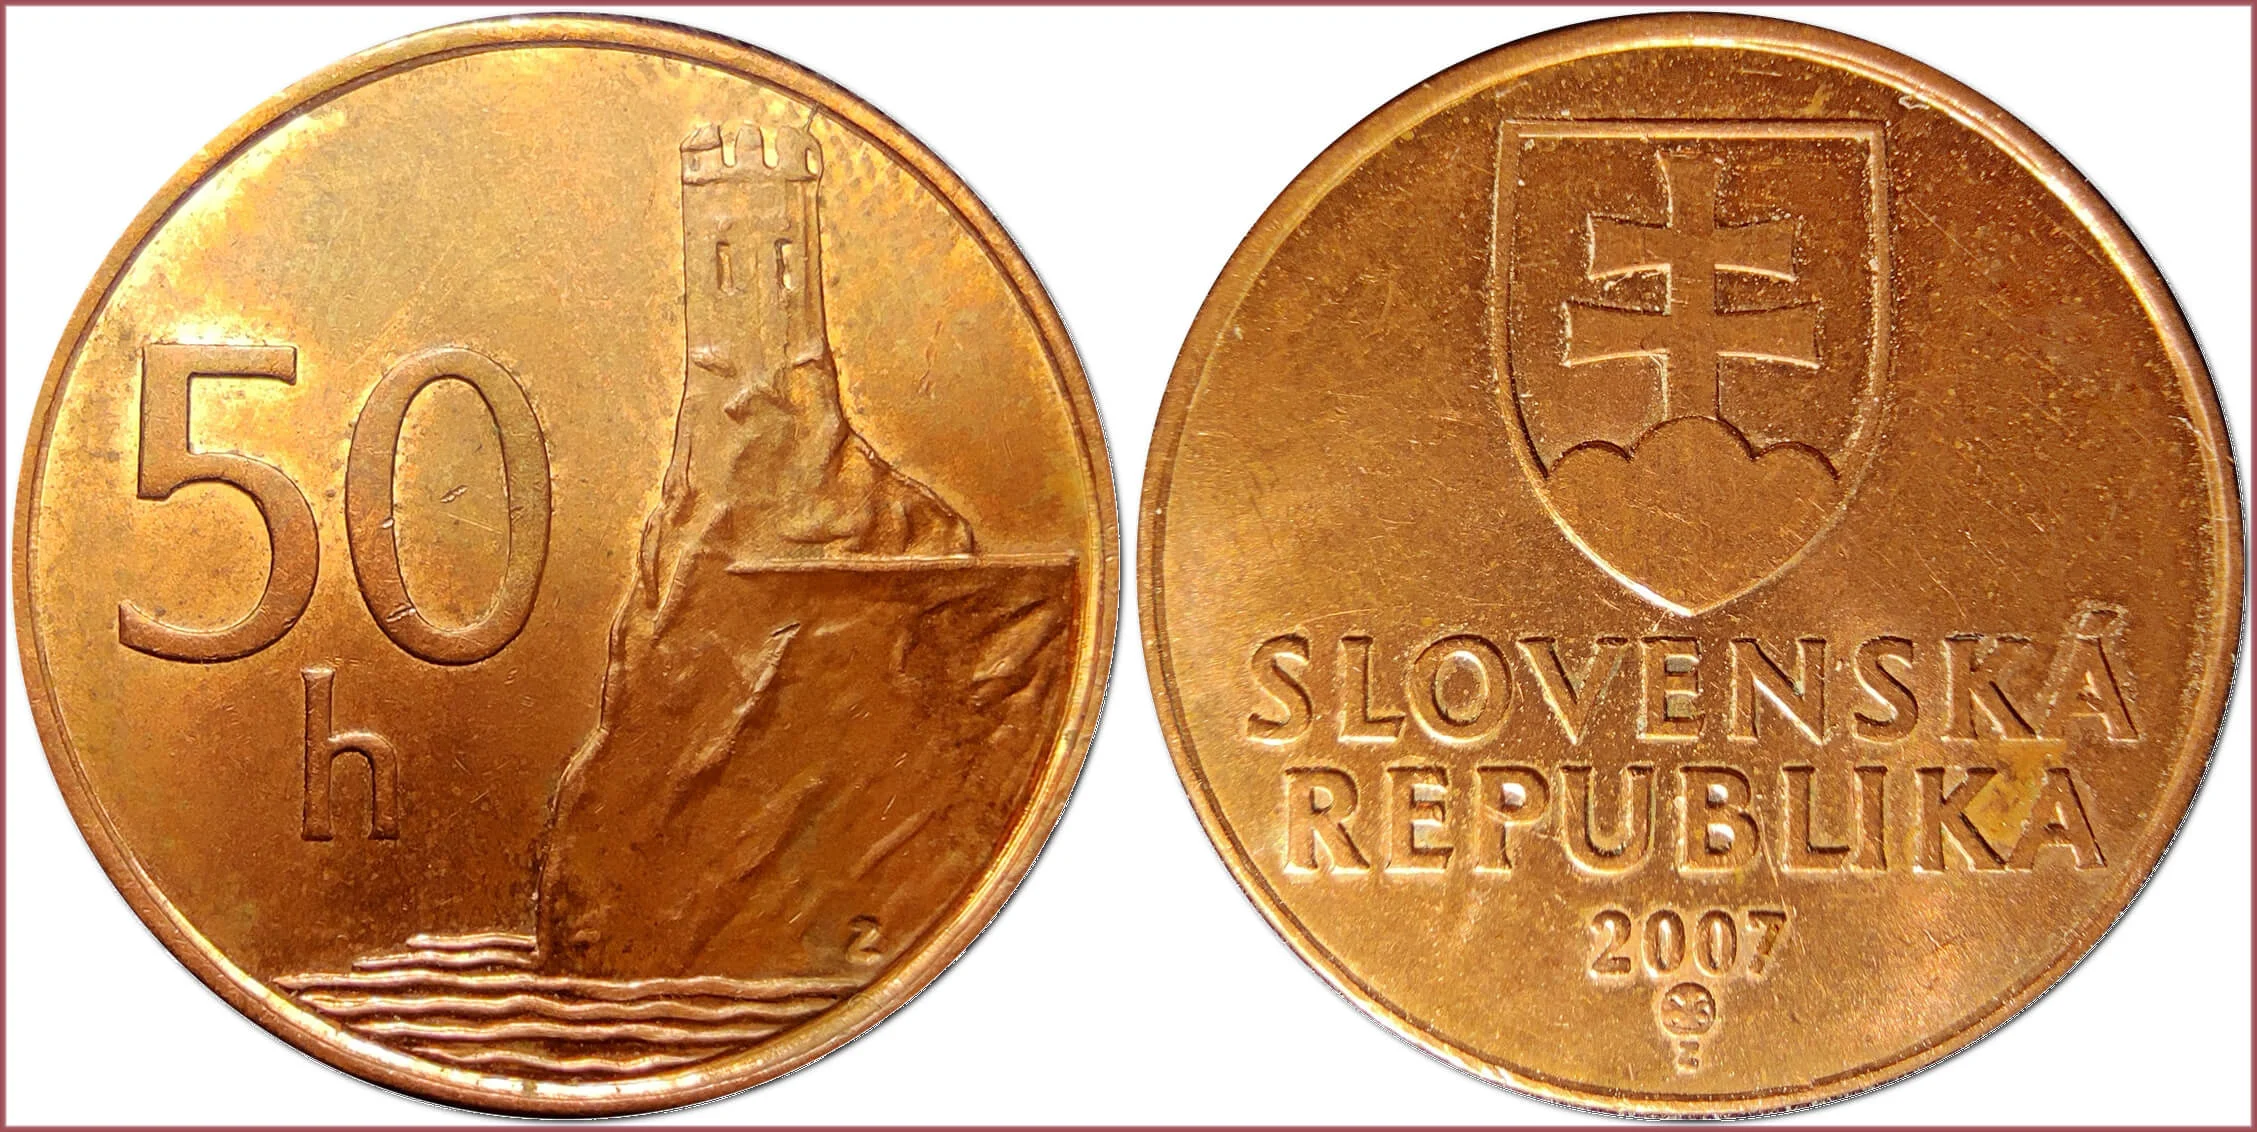 50 halier, 2007: Slovak Republic